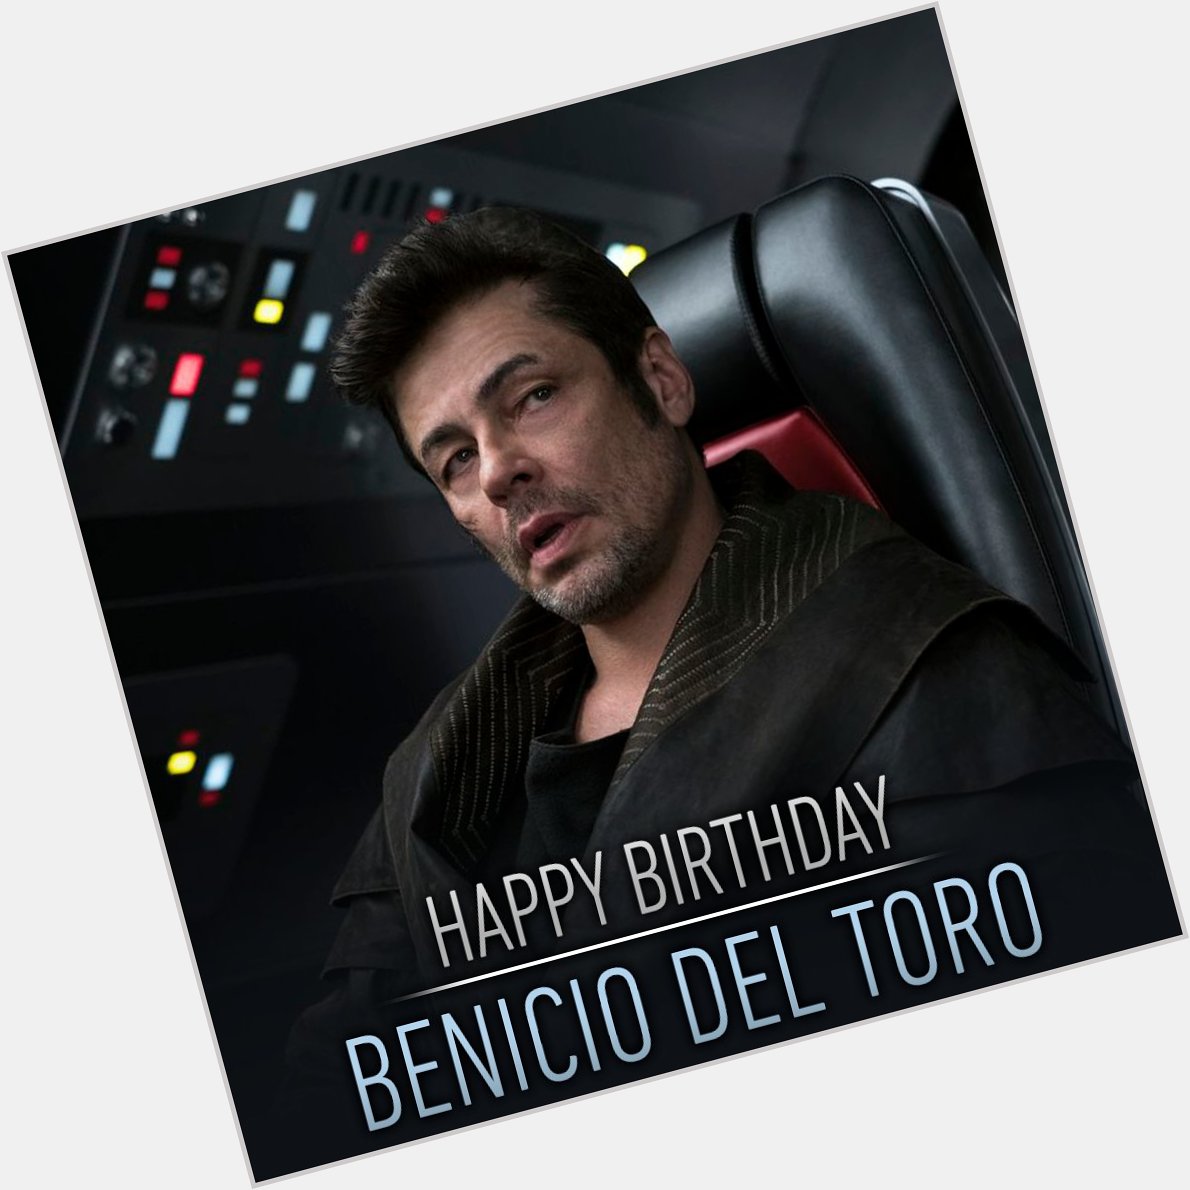 Happy birthday to Benicio del Toro, the man who brought The Last Jedi\s DJ to life. 